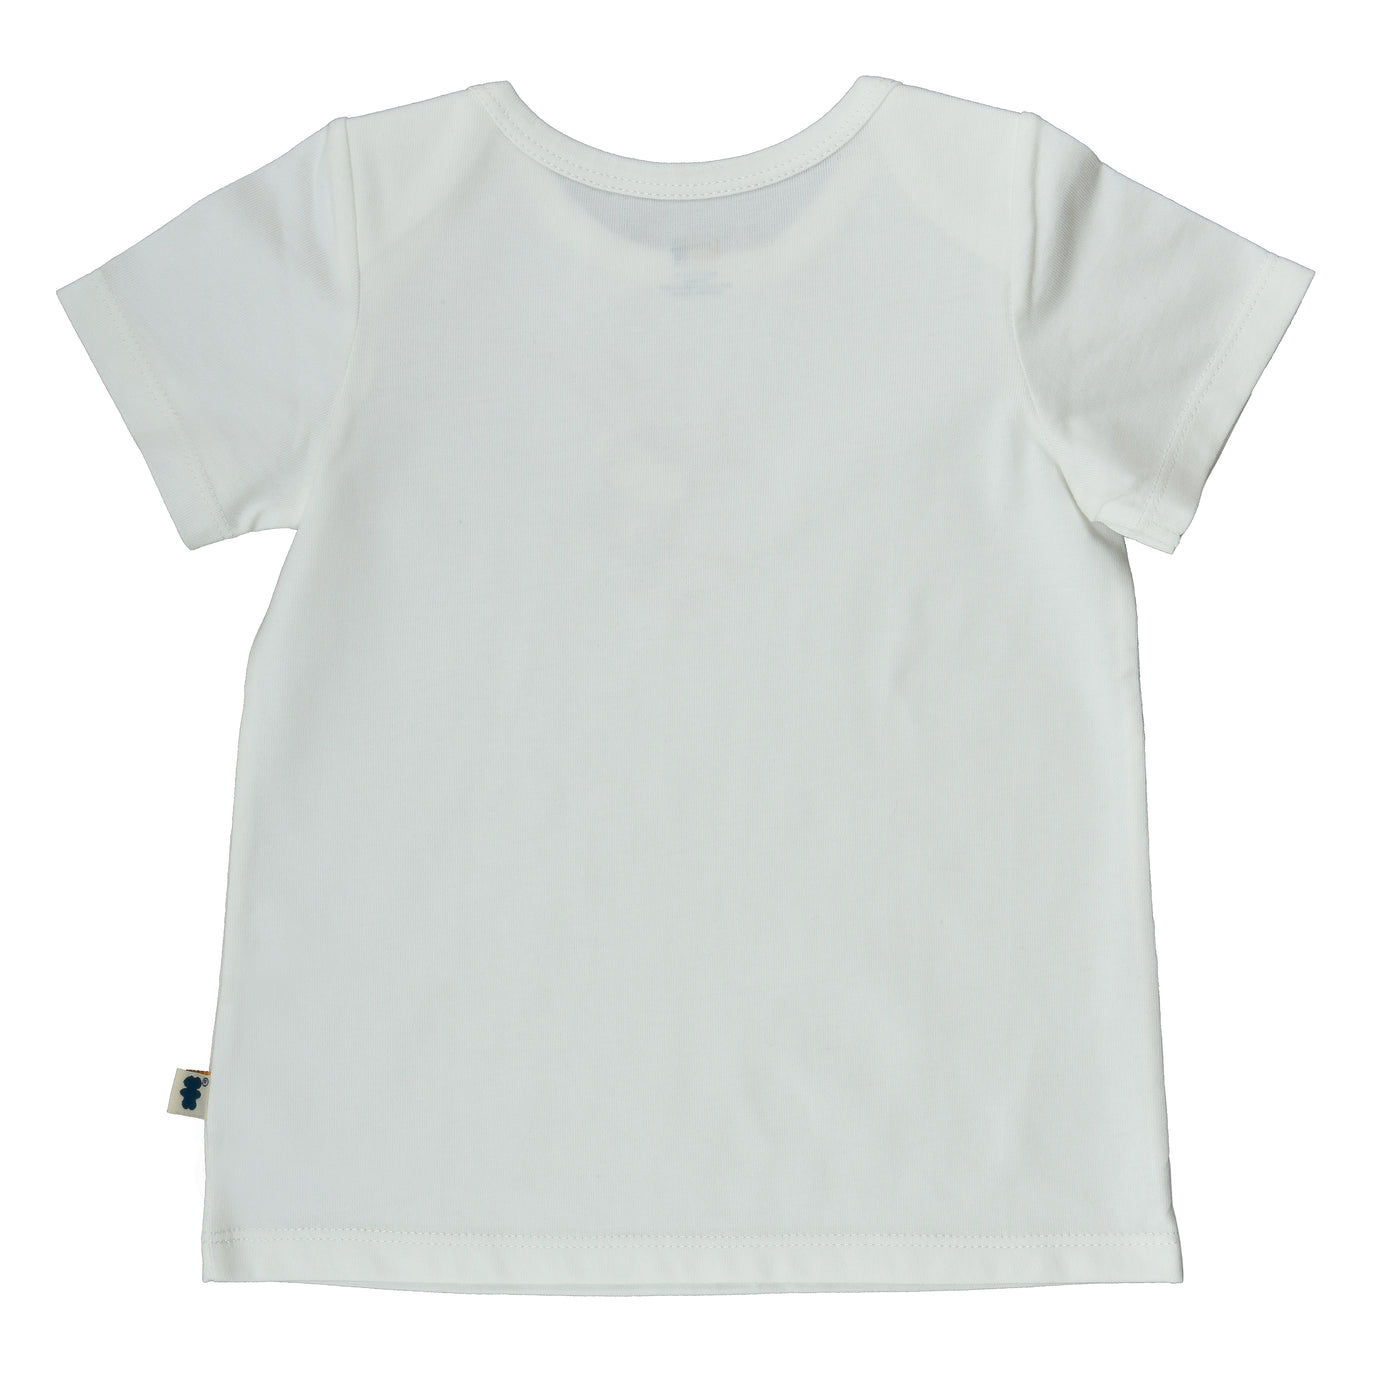 Baby Short Sleeve T-Shirt - Organic Cotton -Chimp